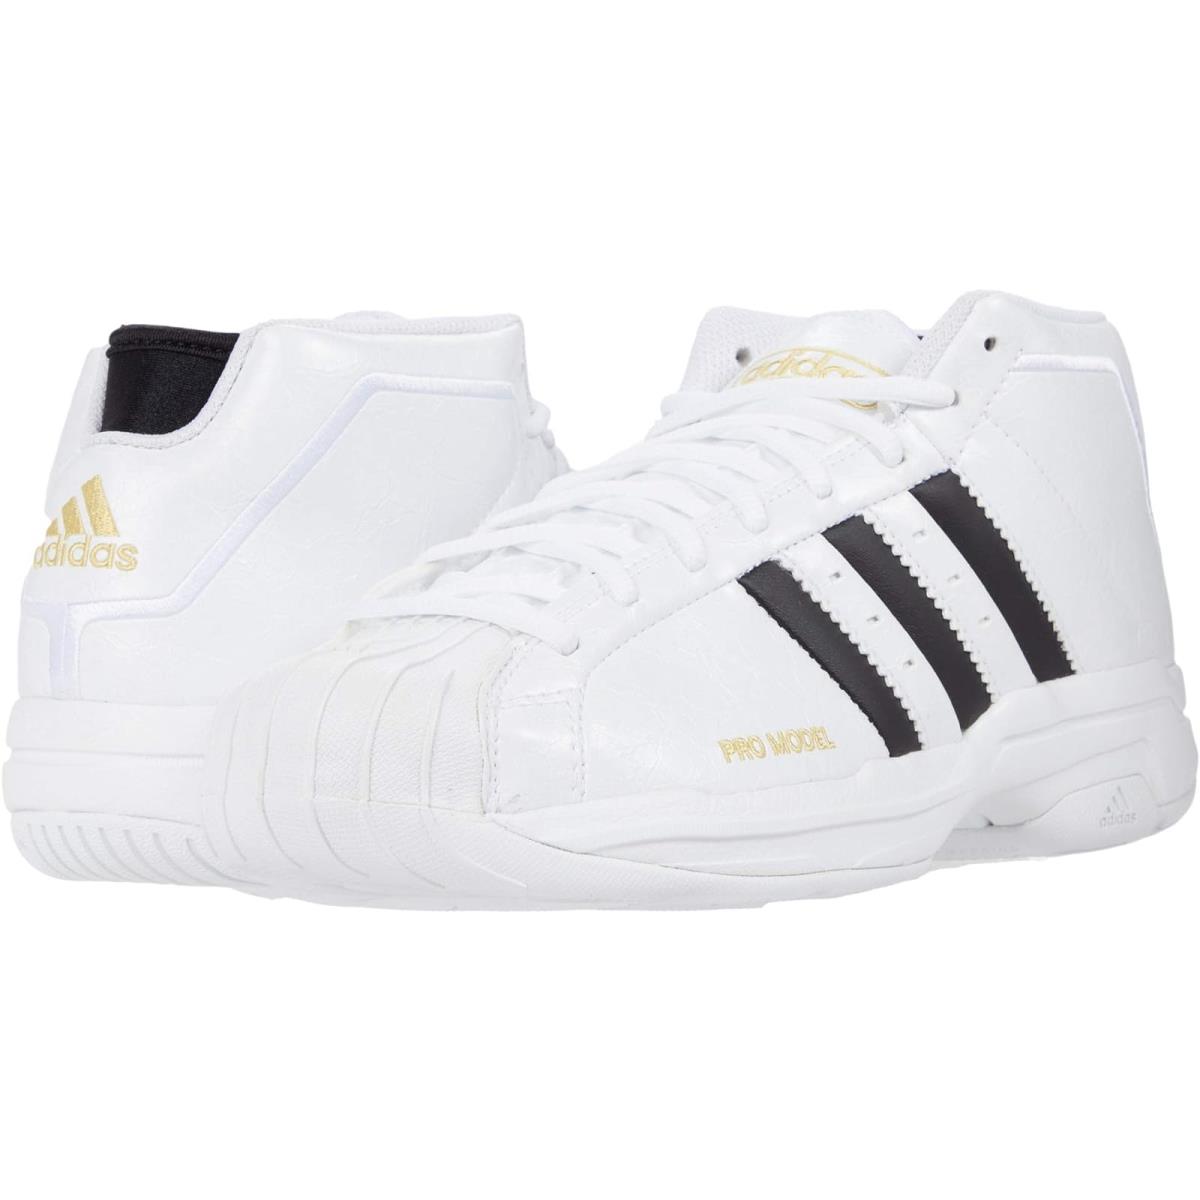 Unisex Sneakers Athletic Shoes Adidas Pro Model 2G Core Black/Footwear White/Core Black